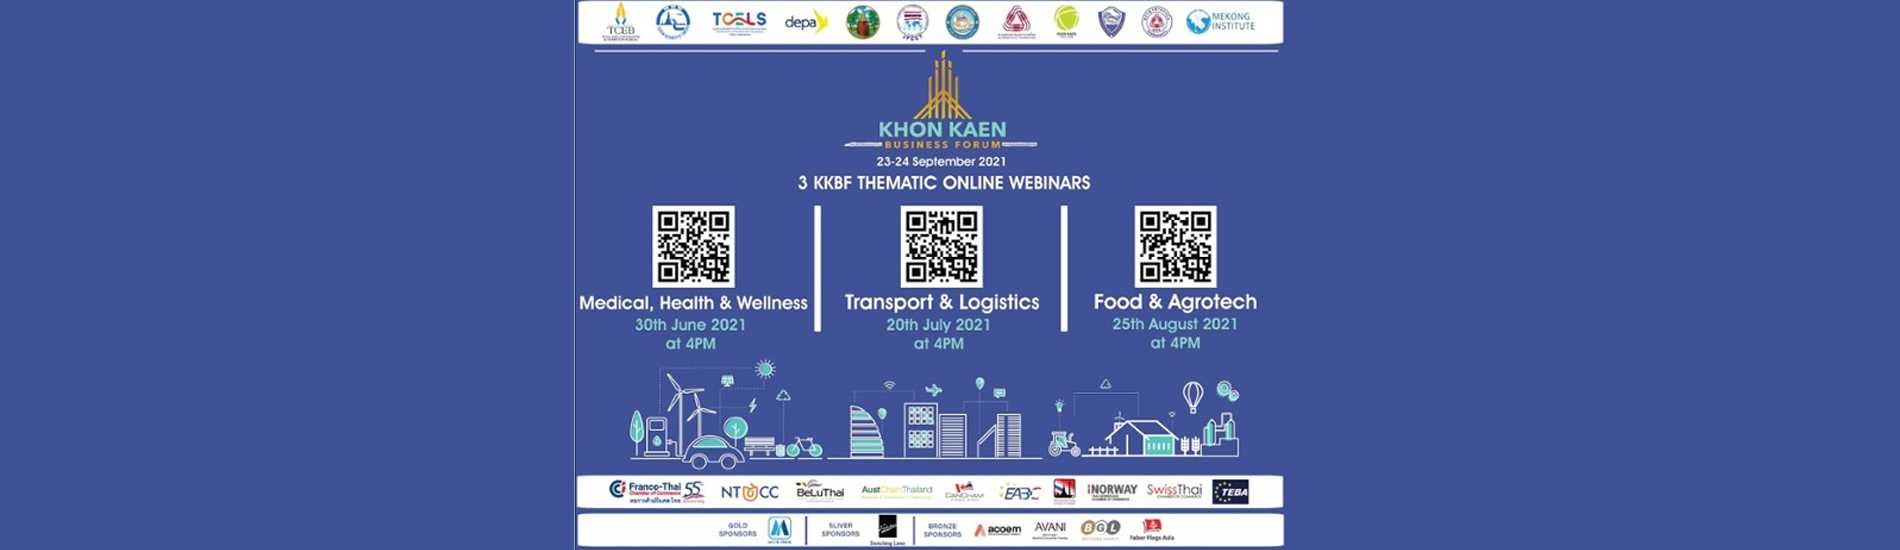 Khon Kaen Business Forum: A Series of Three Thematic Online Webinars